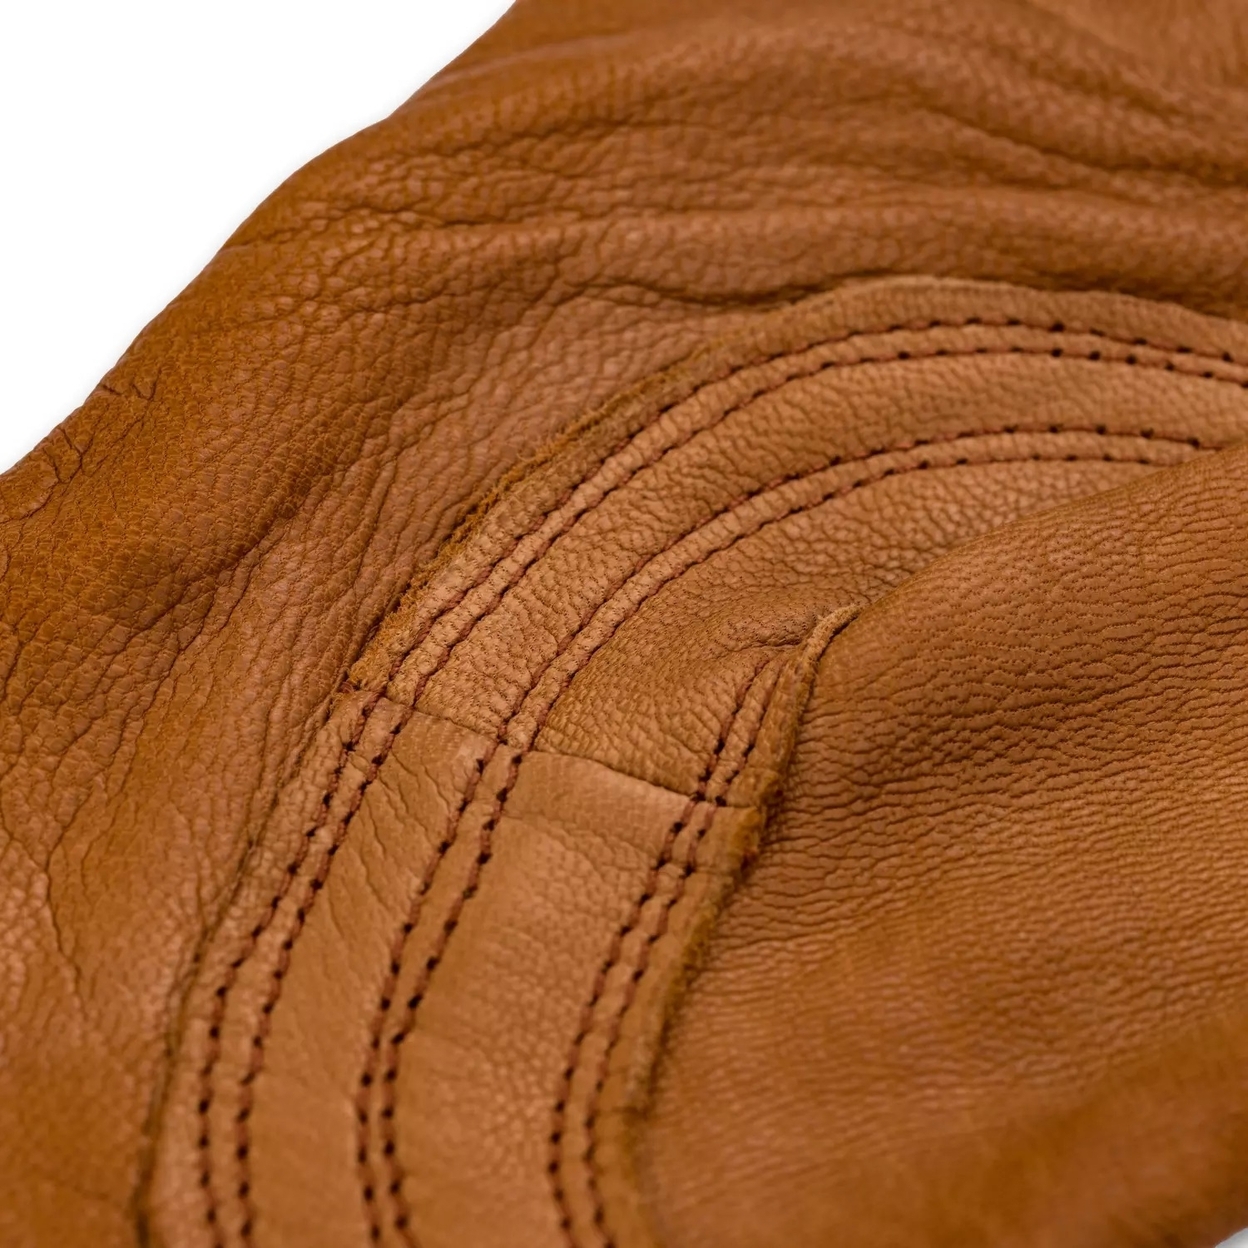 Plainsman Premium Cabretta Brown Leather Gloves, 2 Pairs (Small)